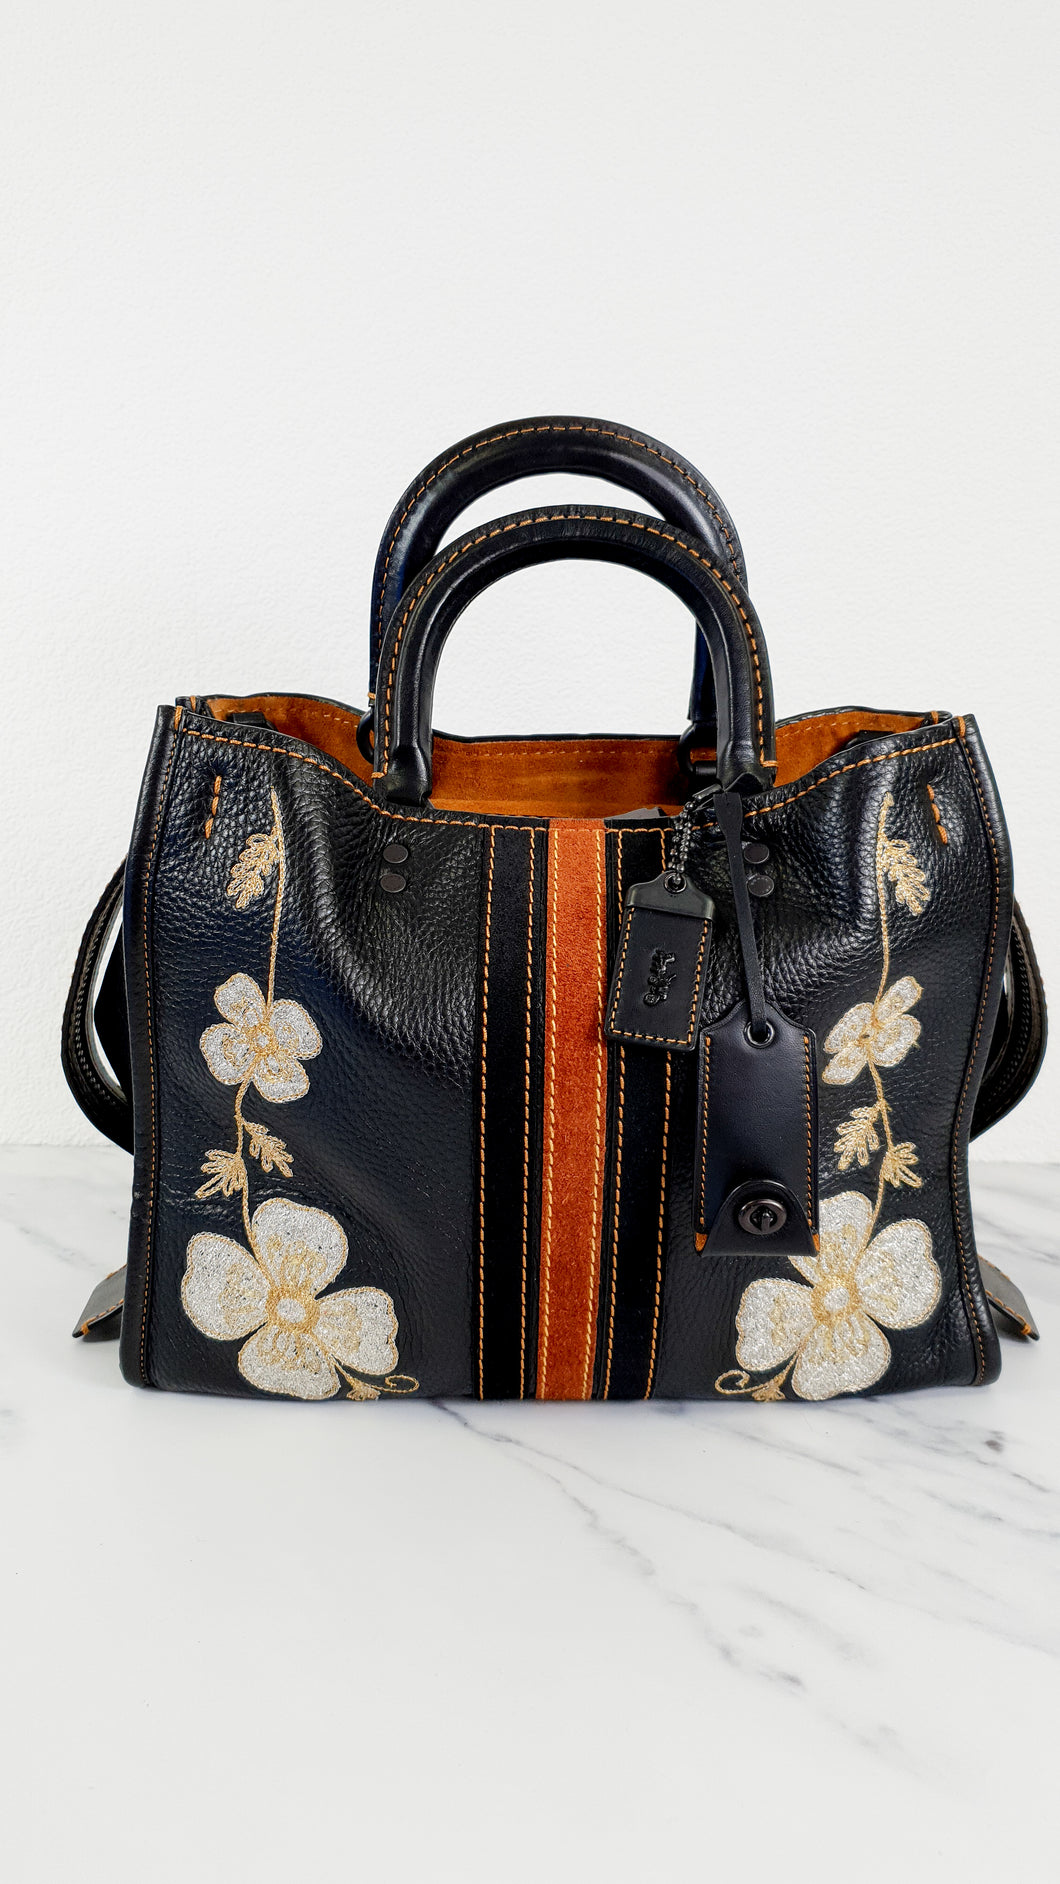 Coach 1941 Rogue 31 in Black with Western Embroidery Flowers & Varsity Stripe - Satchel Handbag Coach 57230